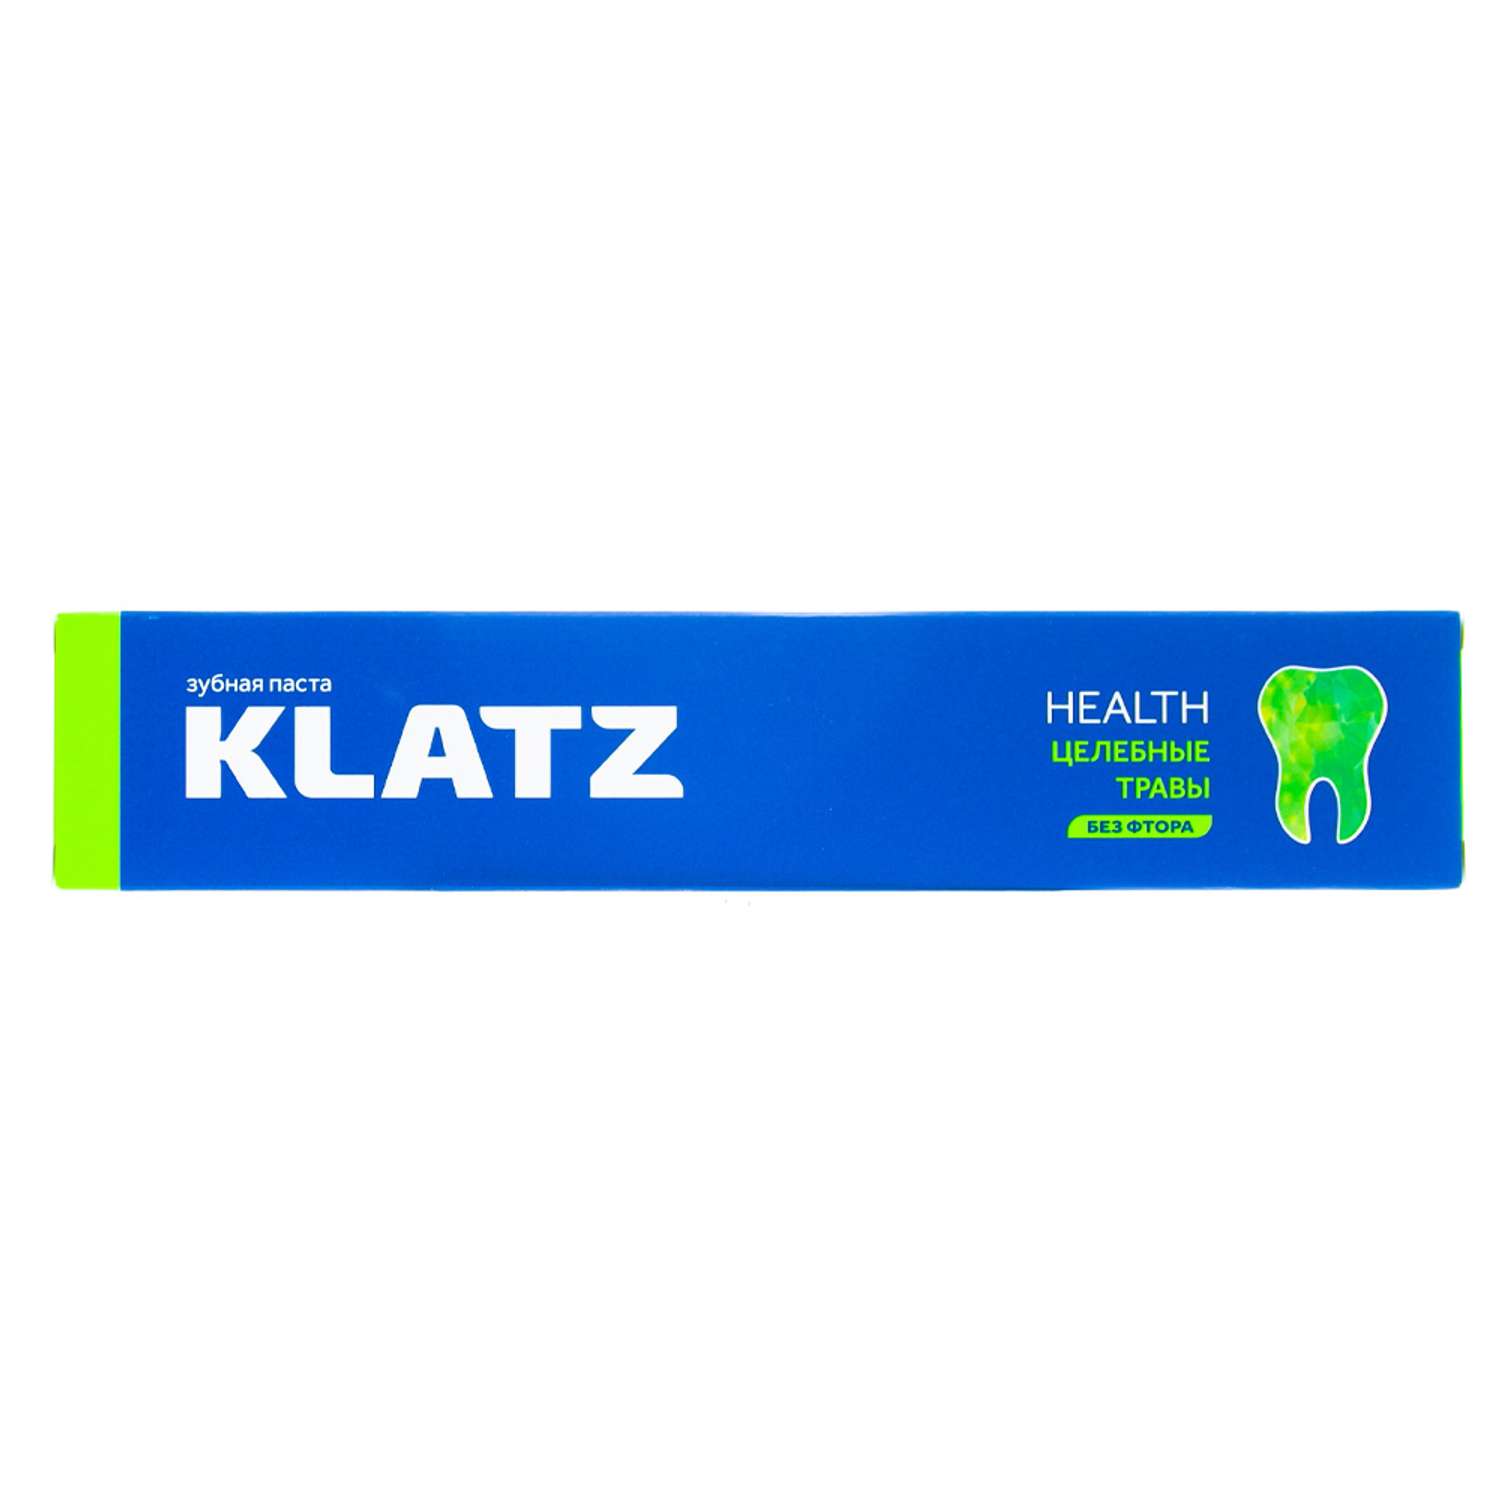 Зубная паста KLATZ HEALTH Целебные травы без фтора 75 мл - фото 4